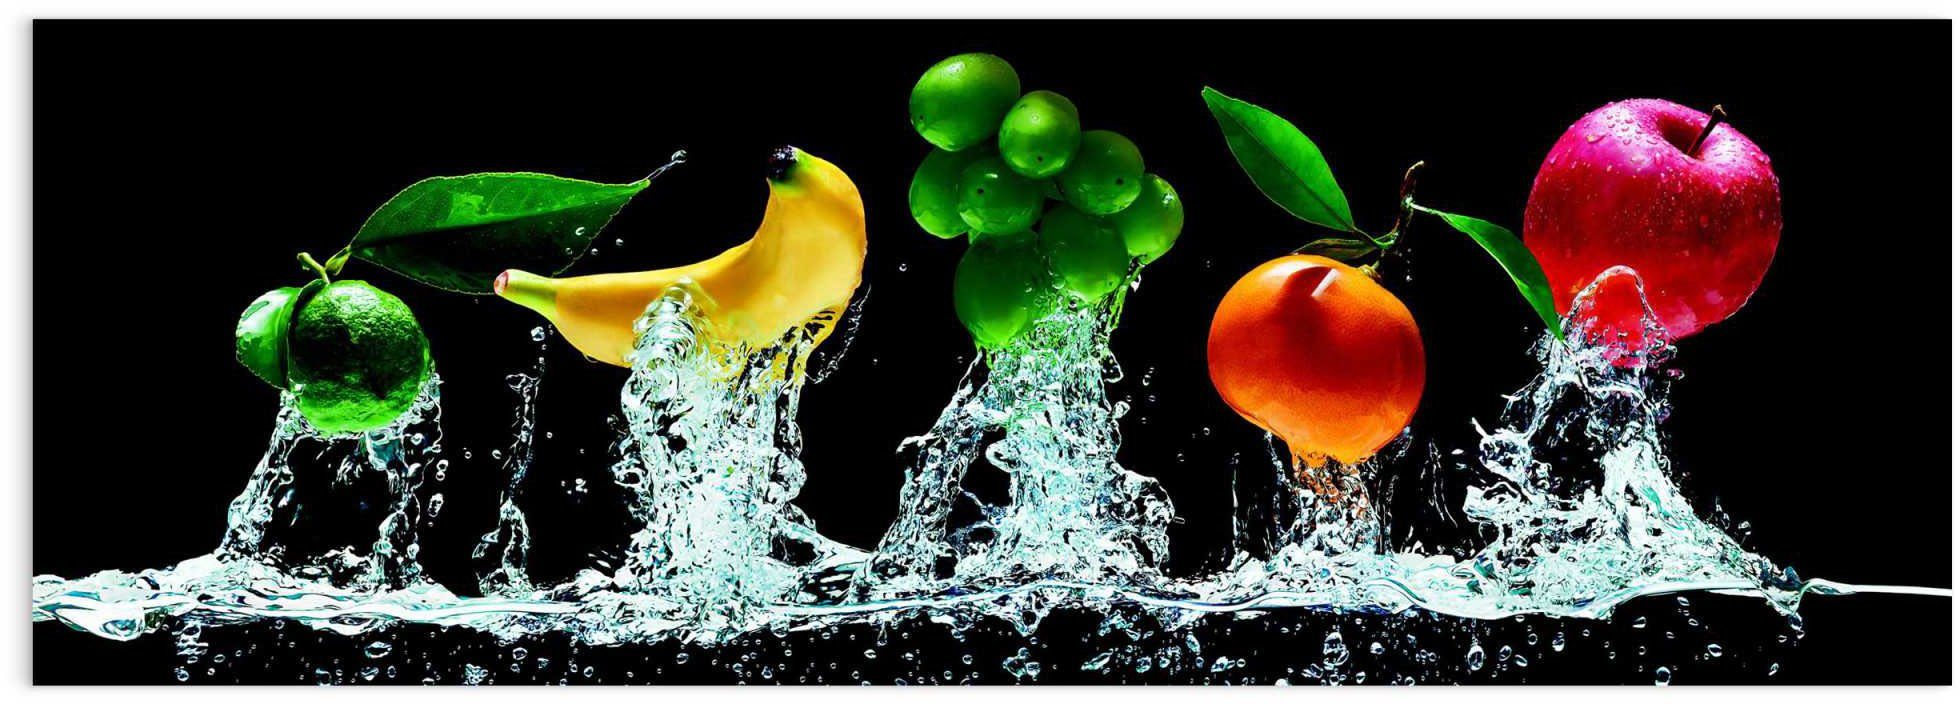 Tutti - Obst Glasbild (1 St) Reinders! Farbenfroh, Wasser Glasbild Obst Frutti -